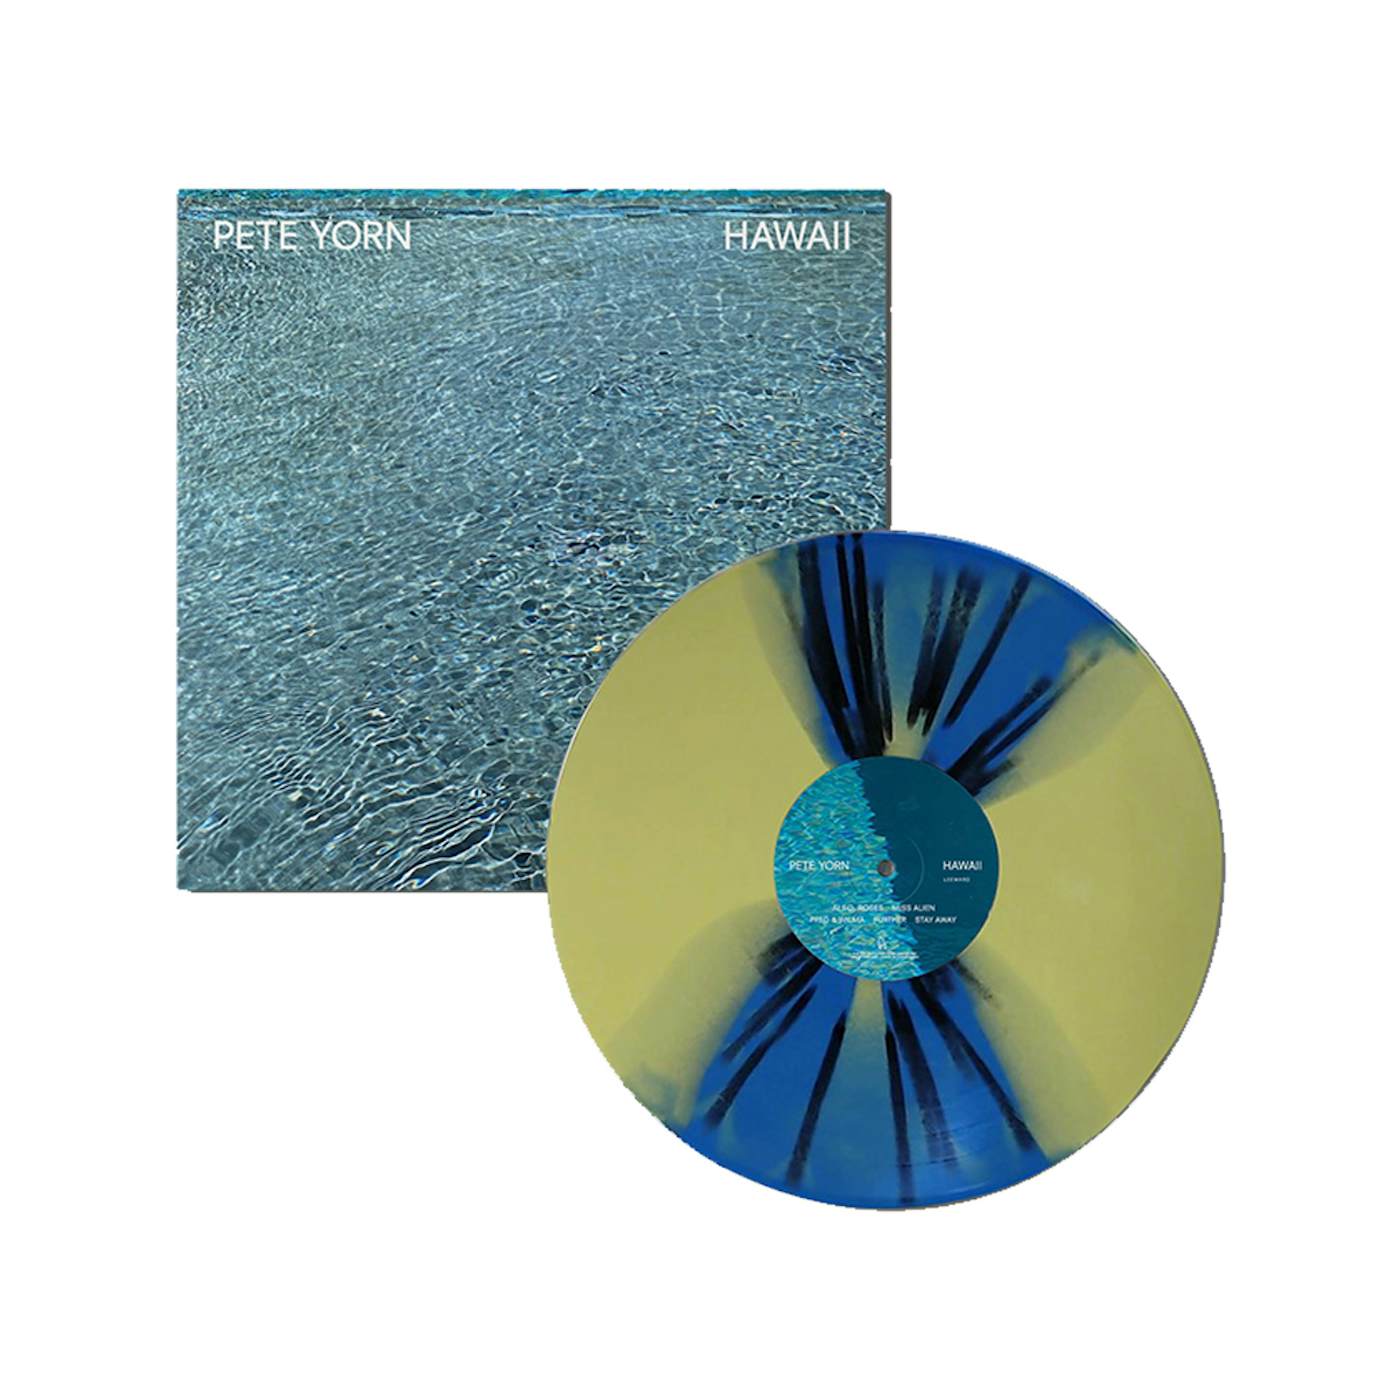 Pete Yorn Limited Edition Hawaii Humuhumunukunukuapua'a Fish Colored Vinyl